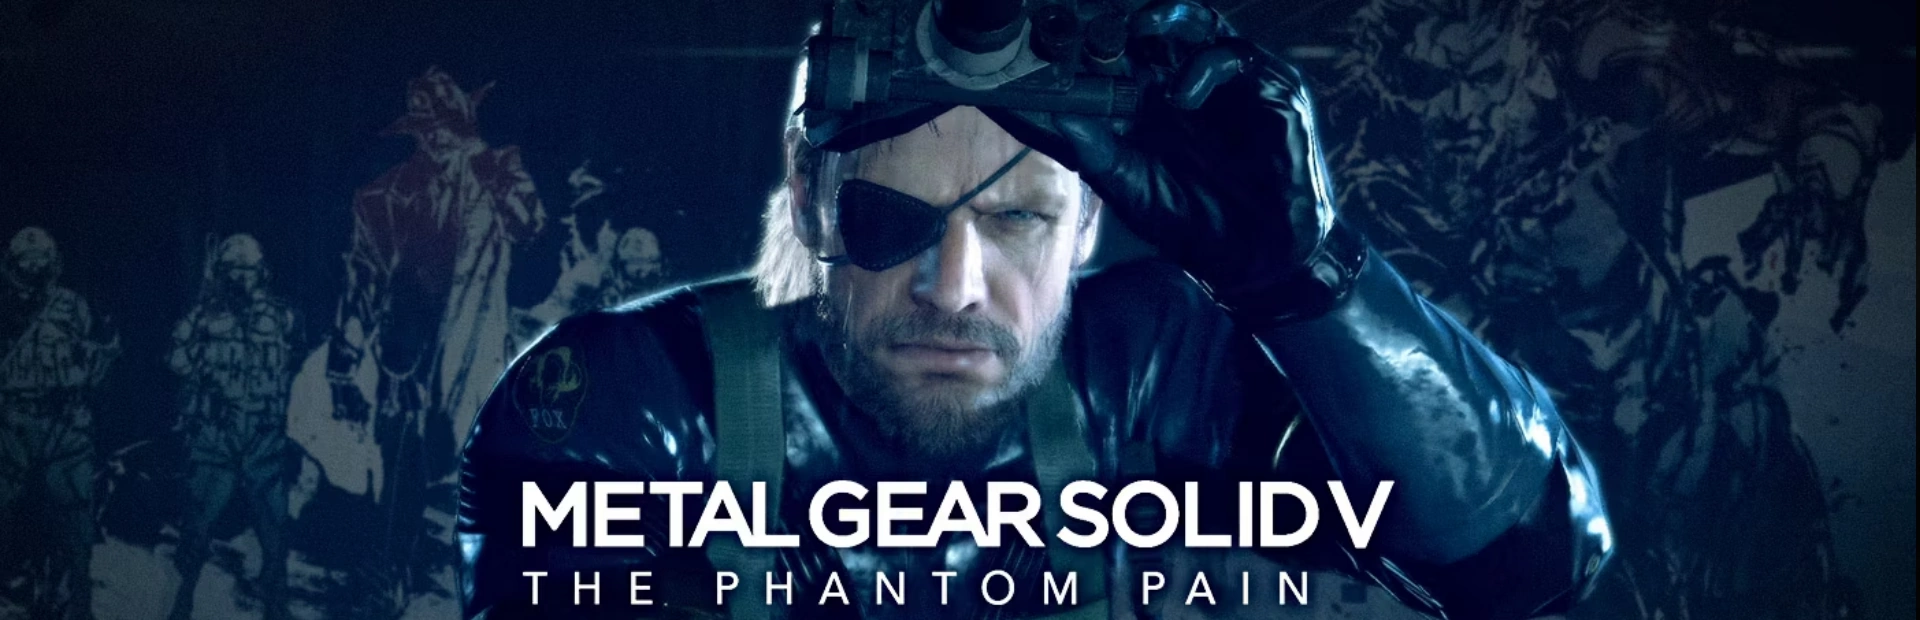 Metal Gear Solid V The Phantom Pain.banner3